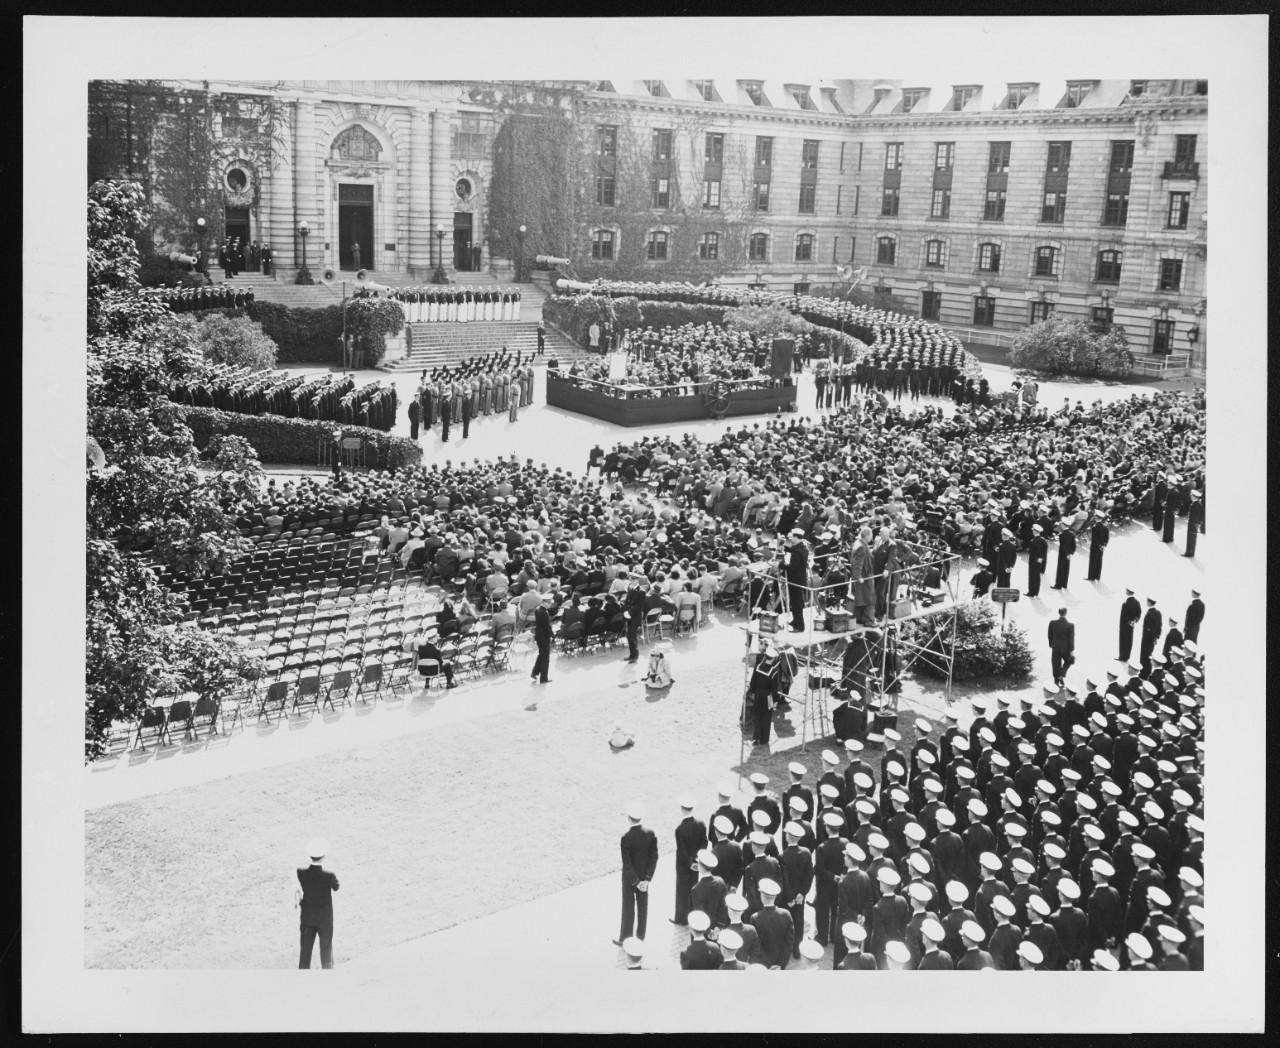 Naval Academy Centennial Ceremonies (1845-1945)